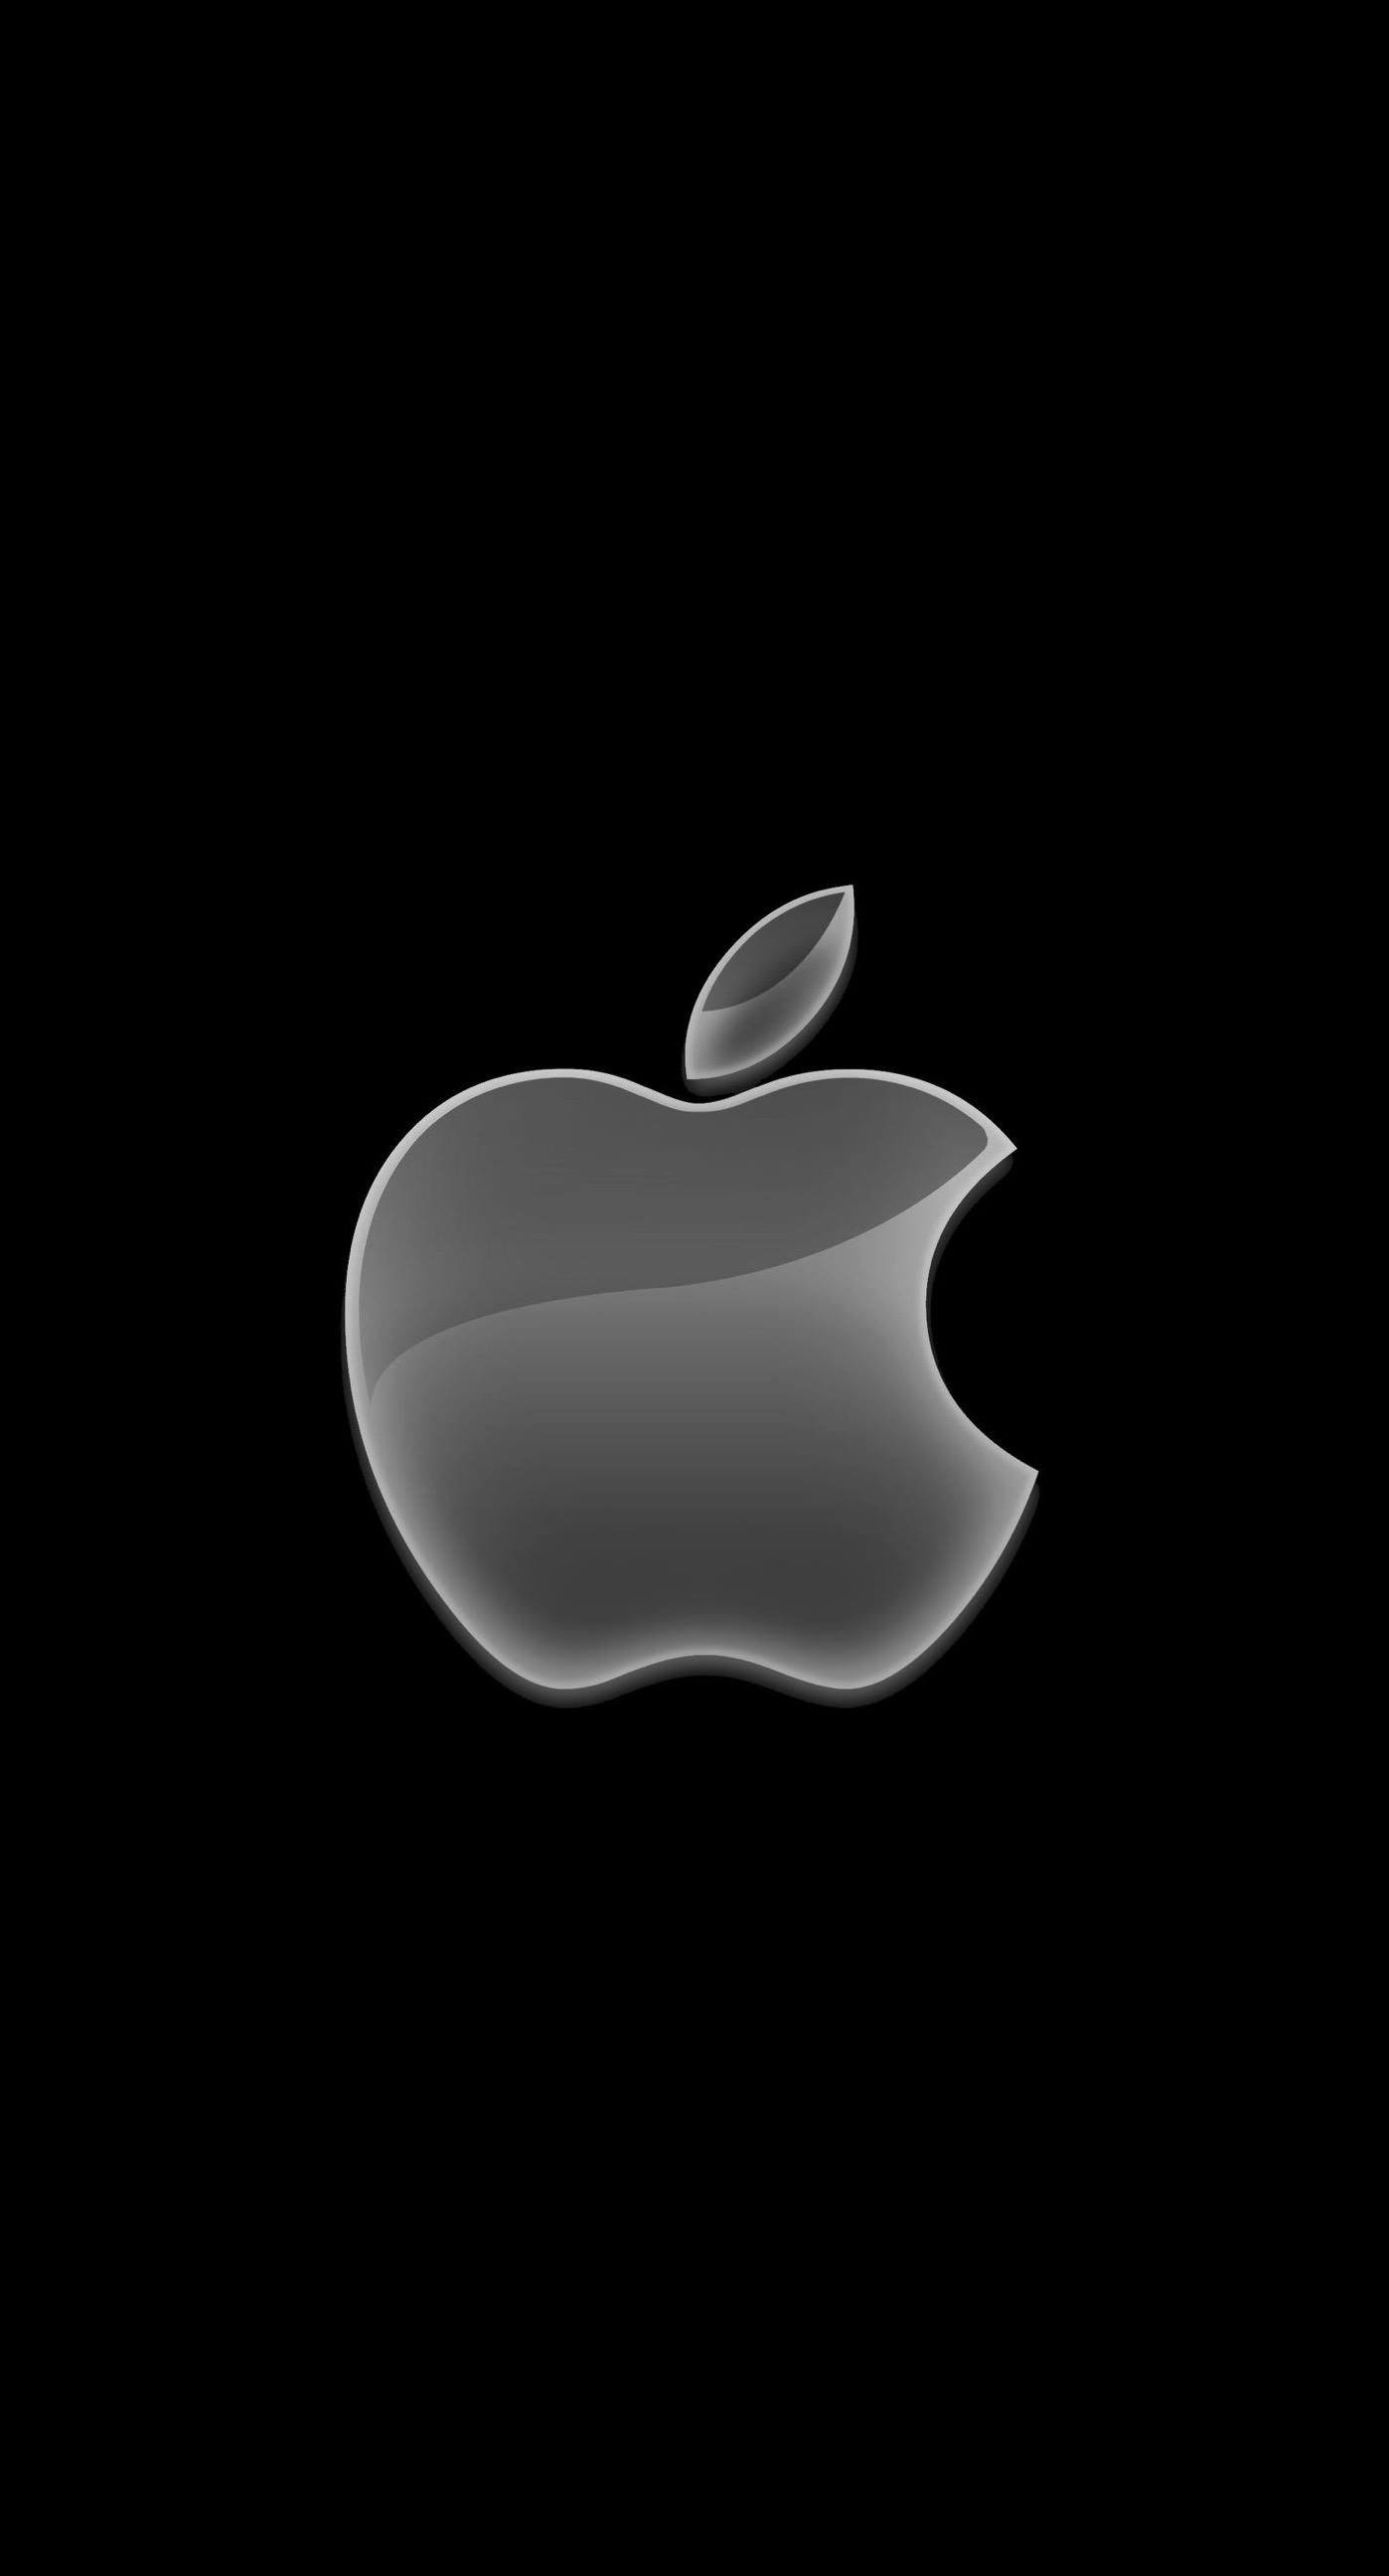 apple imovie for windows 7 free download